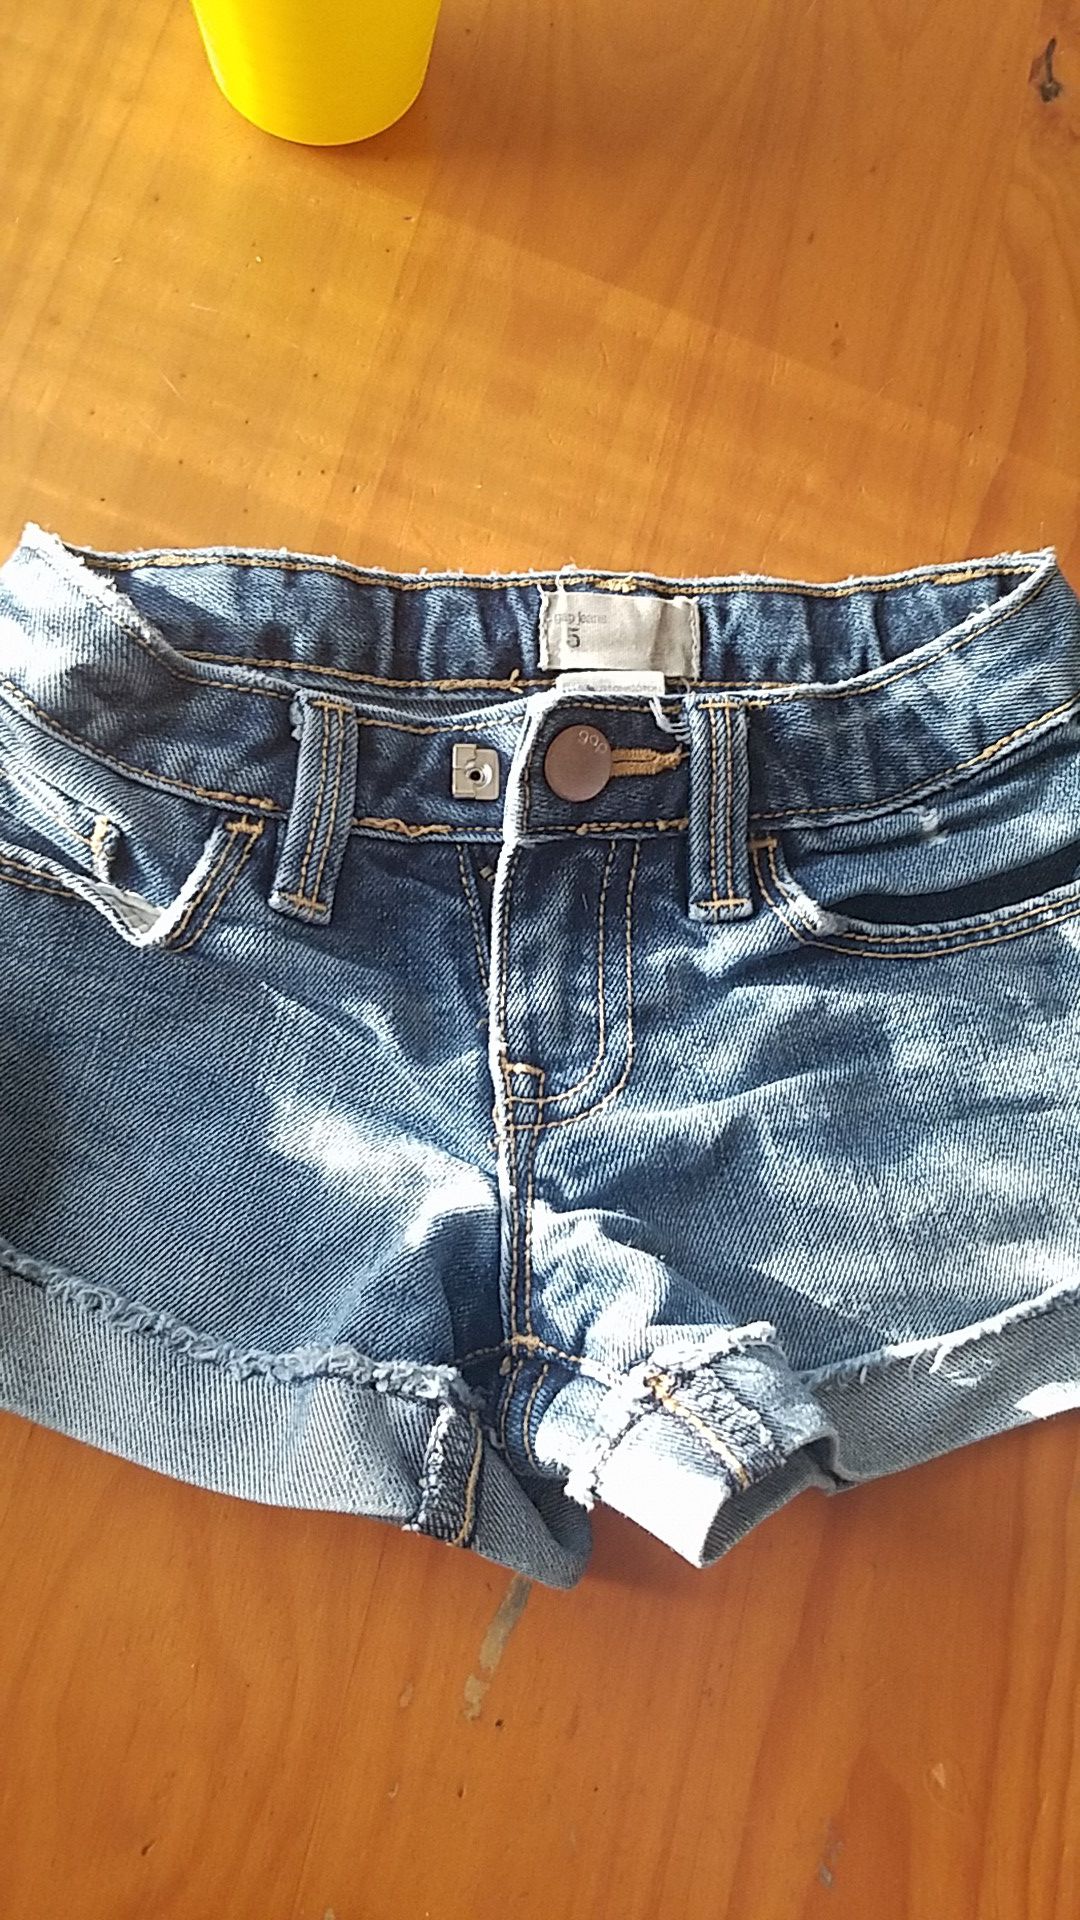 Gap shorts size 5t